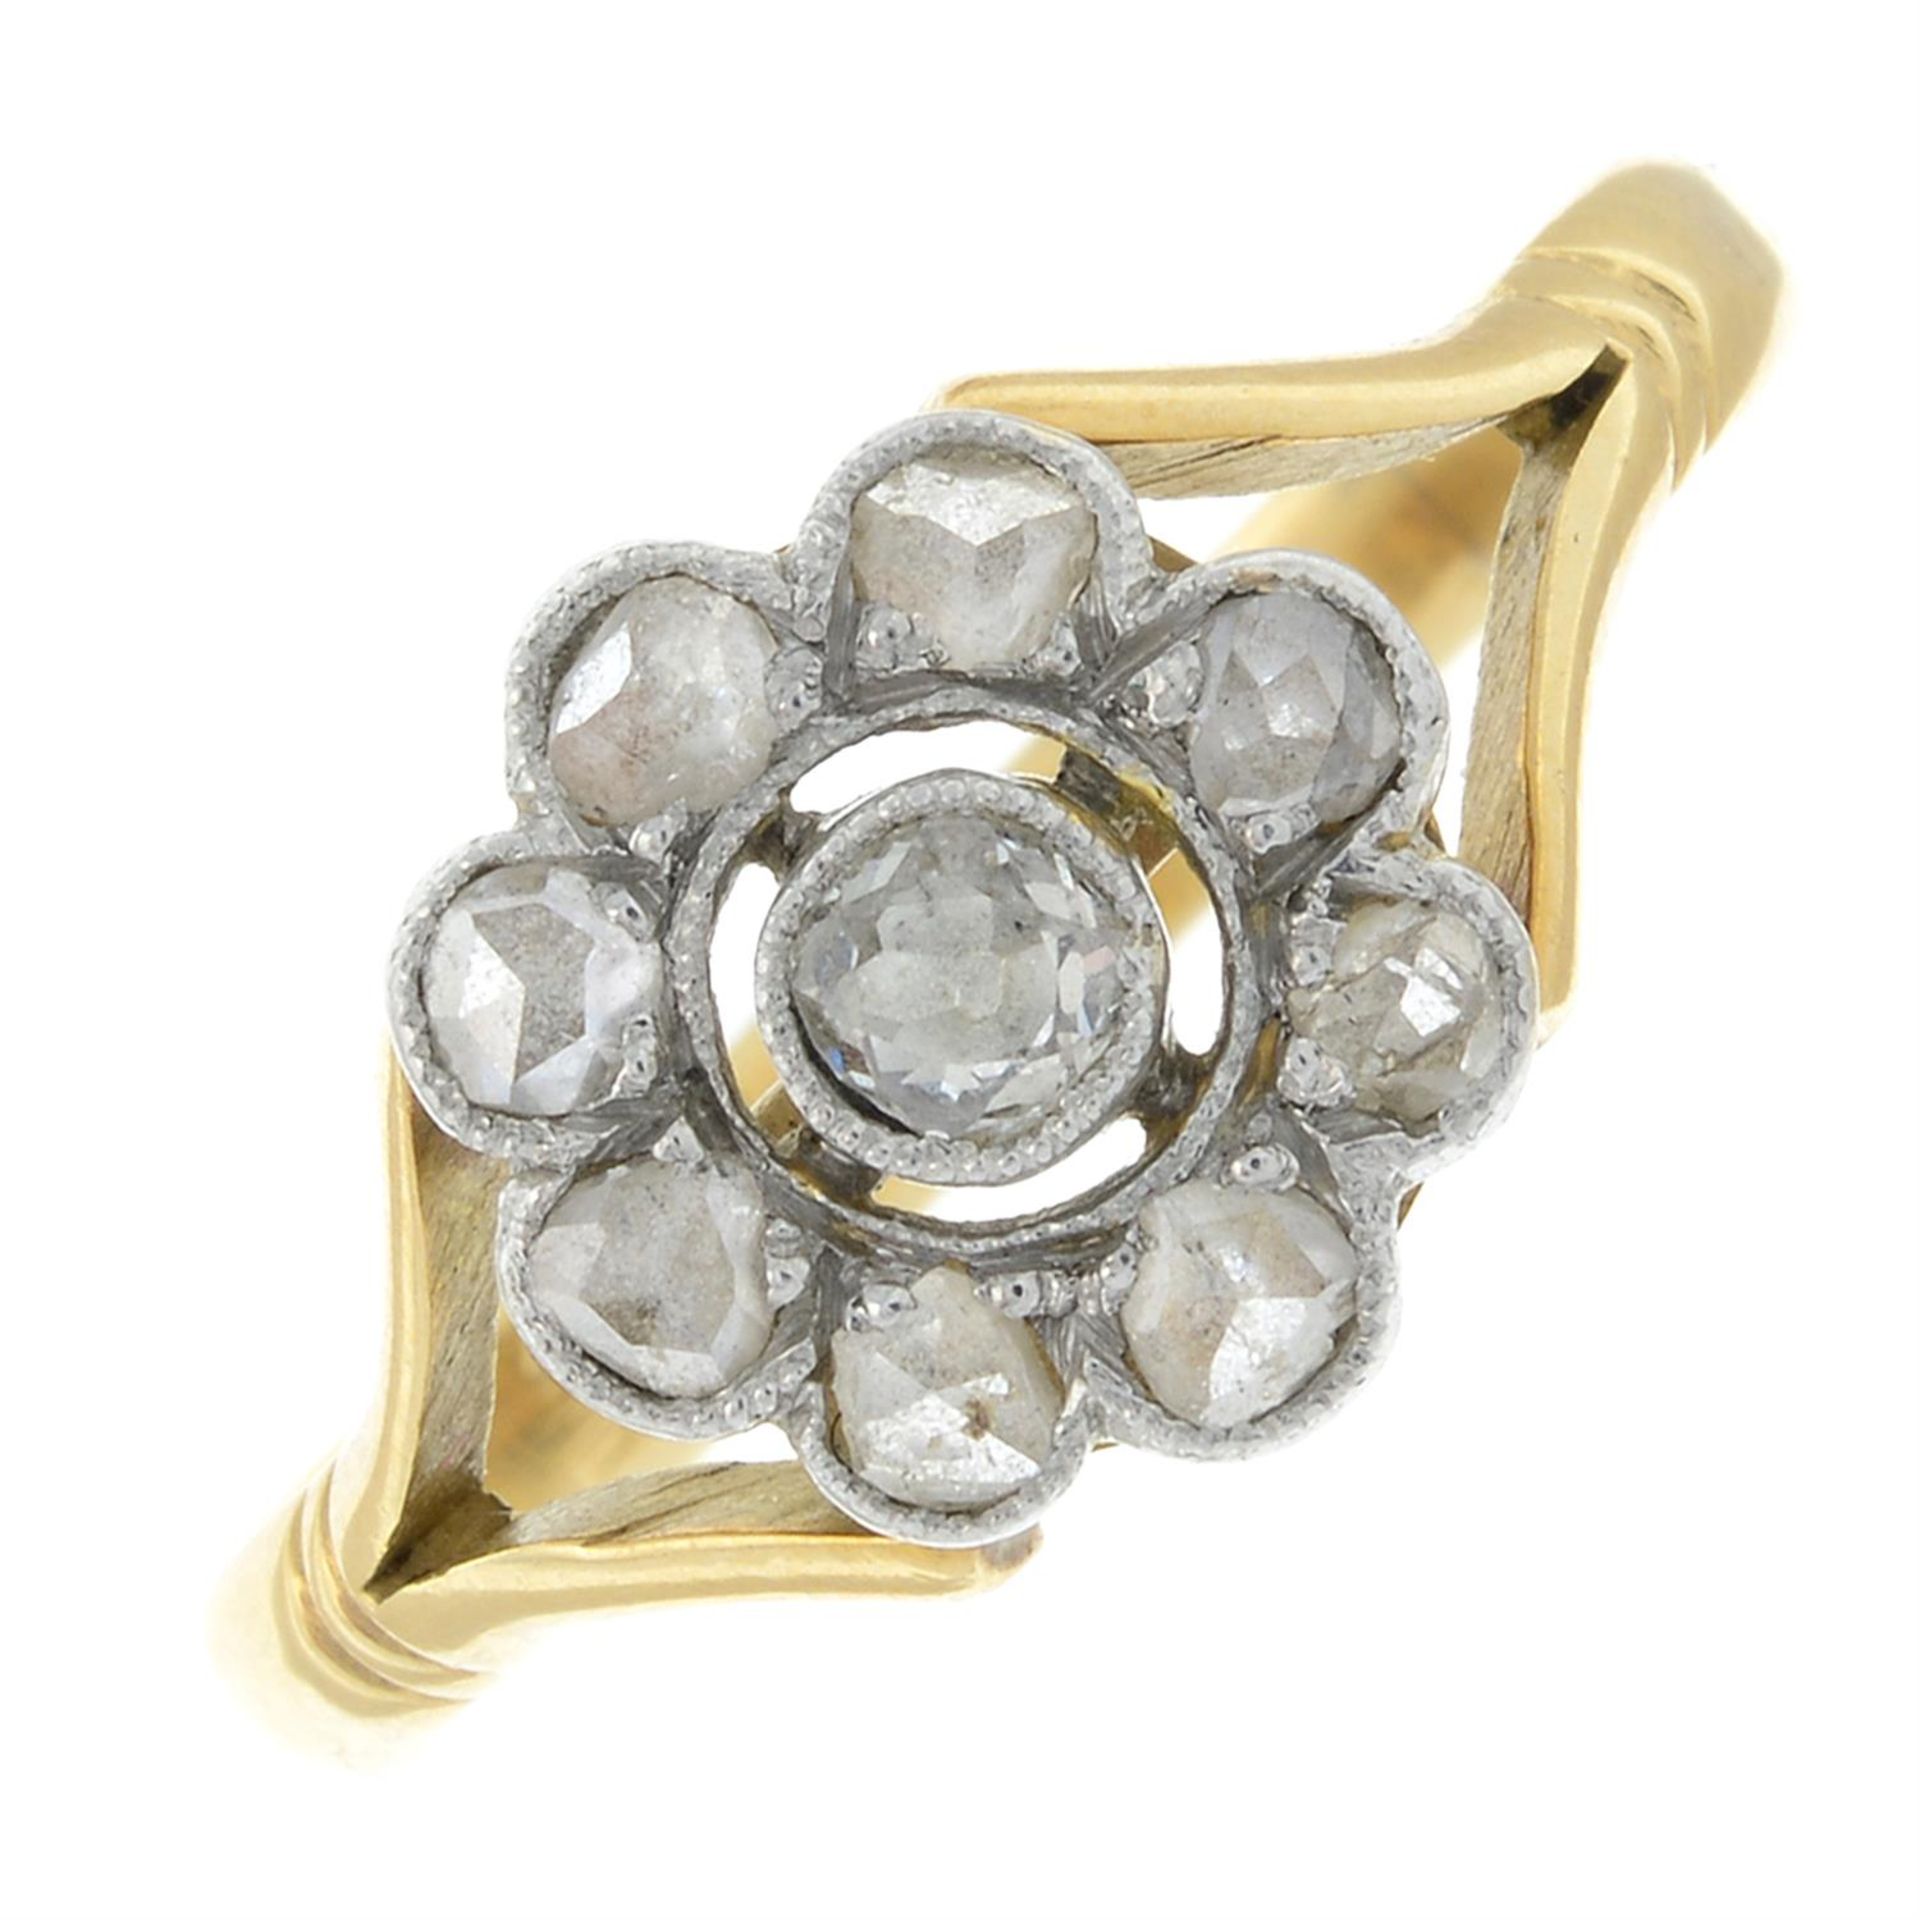 A vari-cut diamond floral cluster ring.